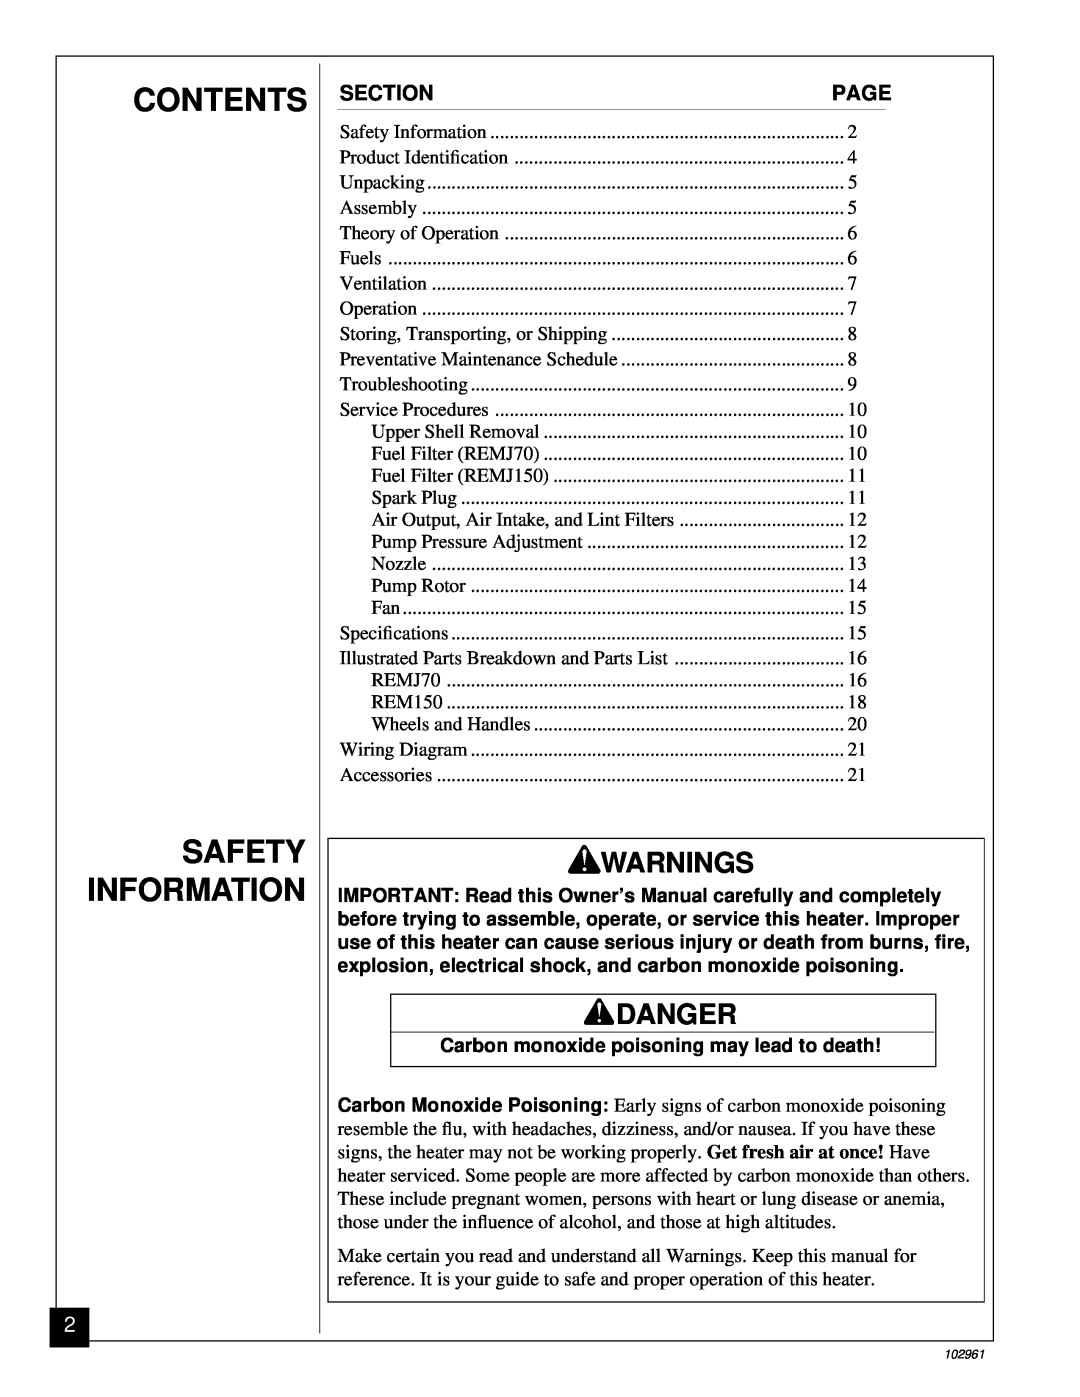 Remington REMJ150, REMJ70 owner manual Contents, Safety Information, Warnings, Danger, Section, Page 